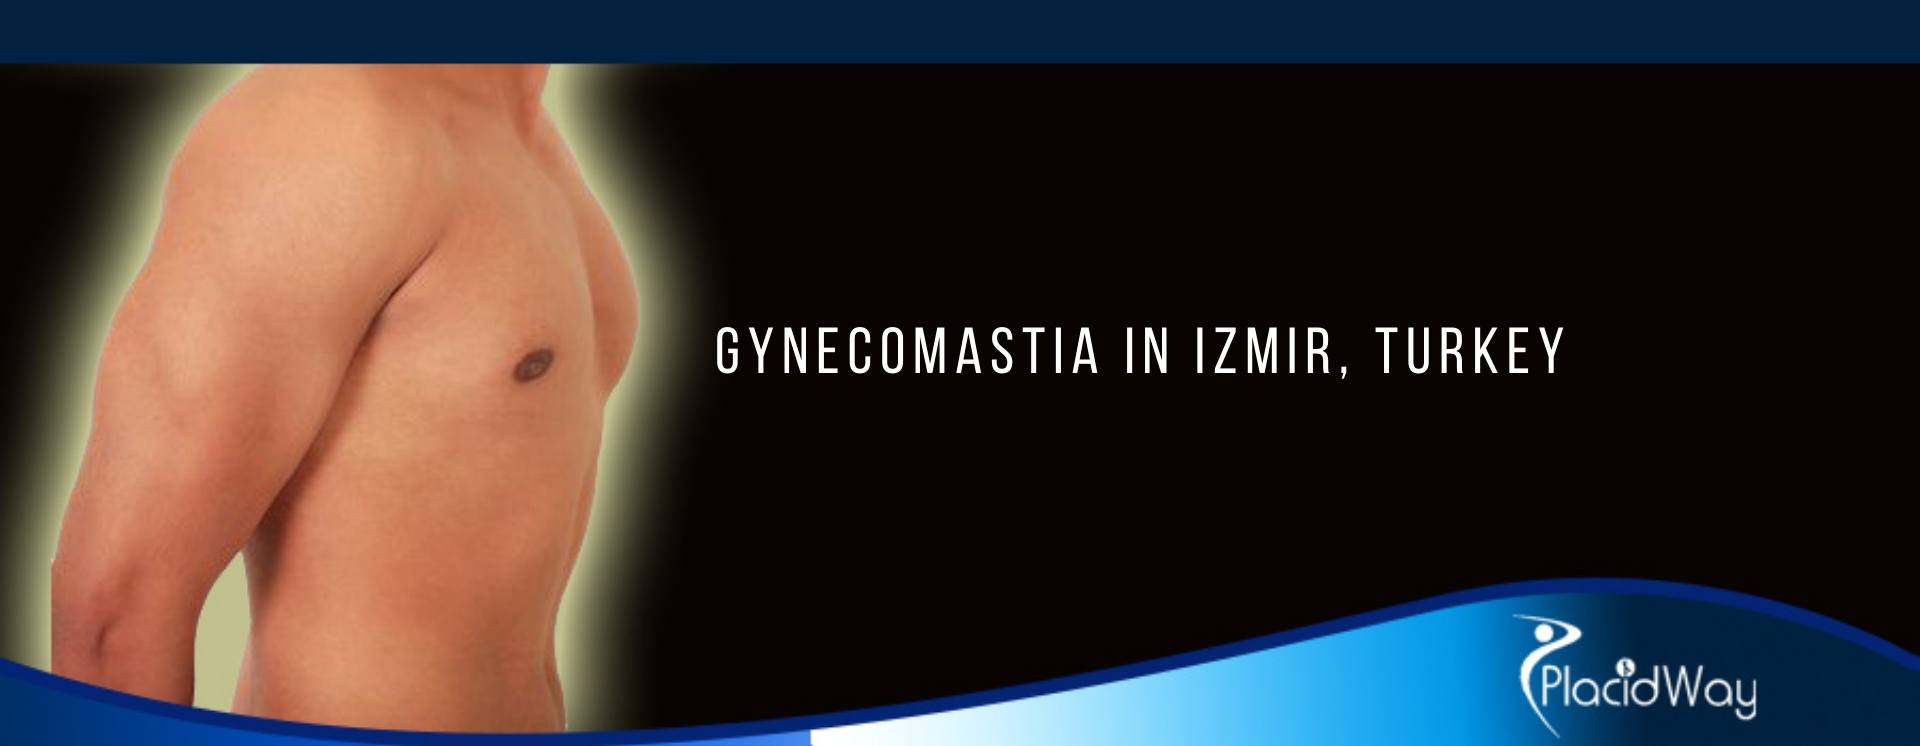 Gynecomastia in Izmir, Turkey